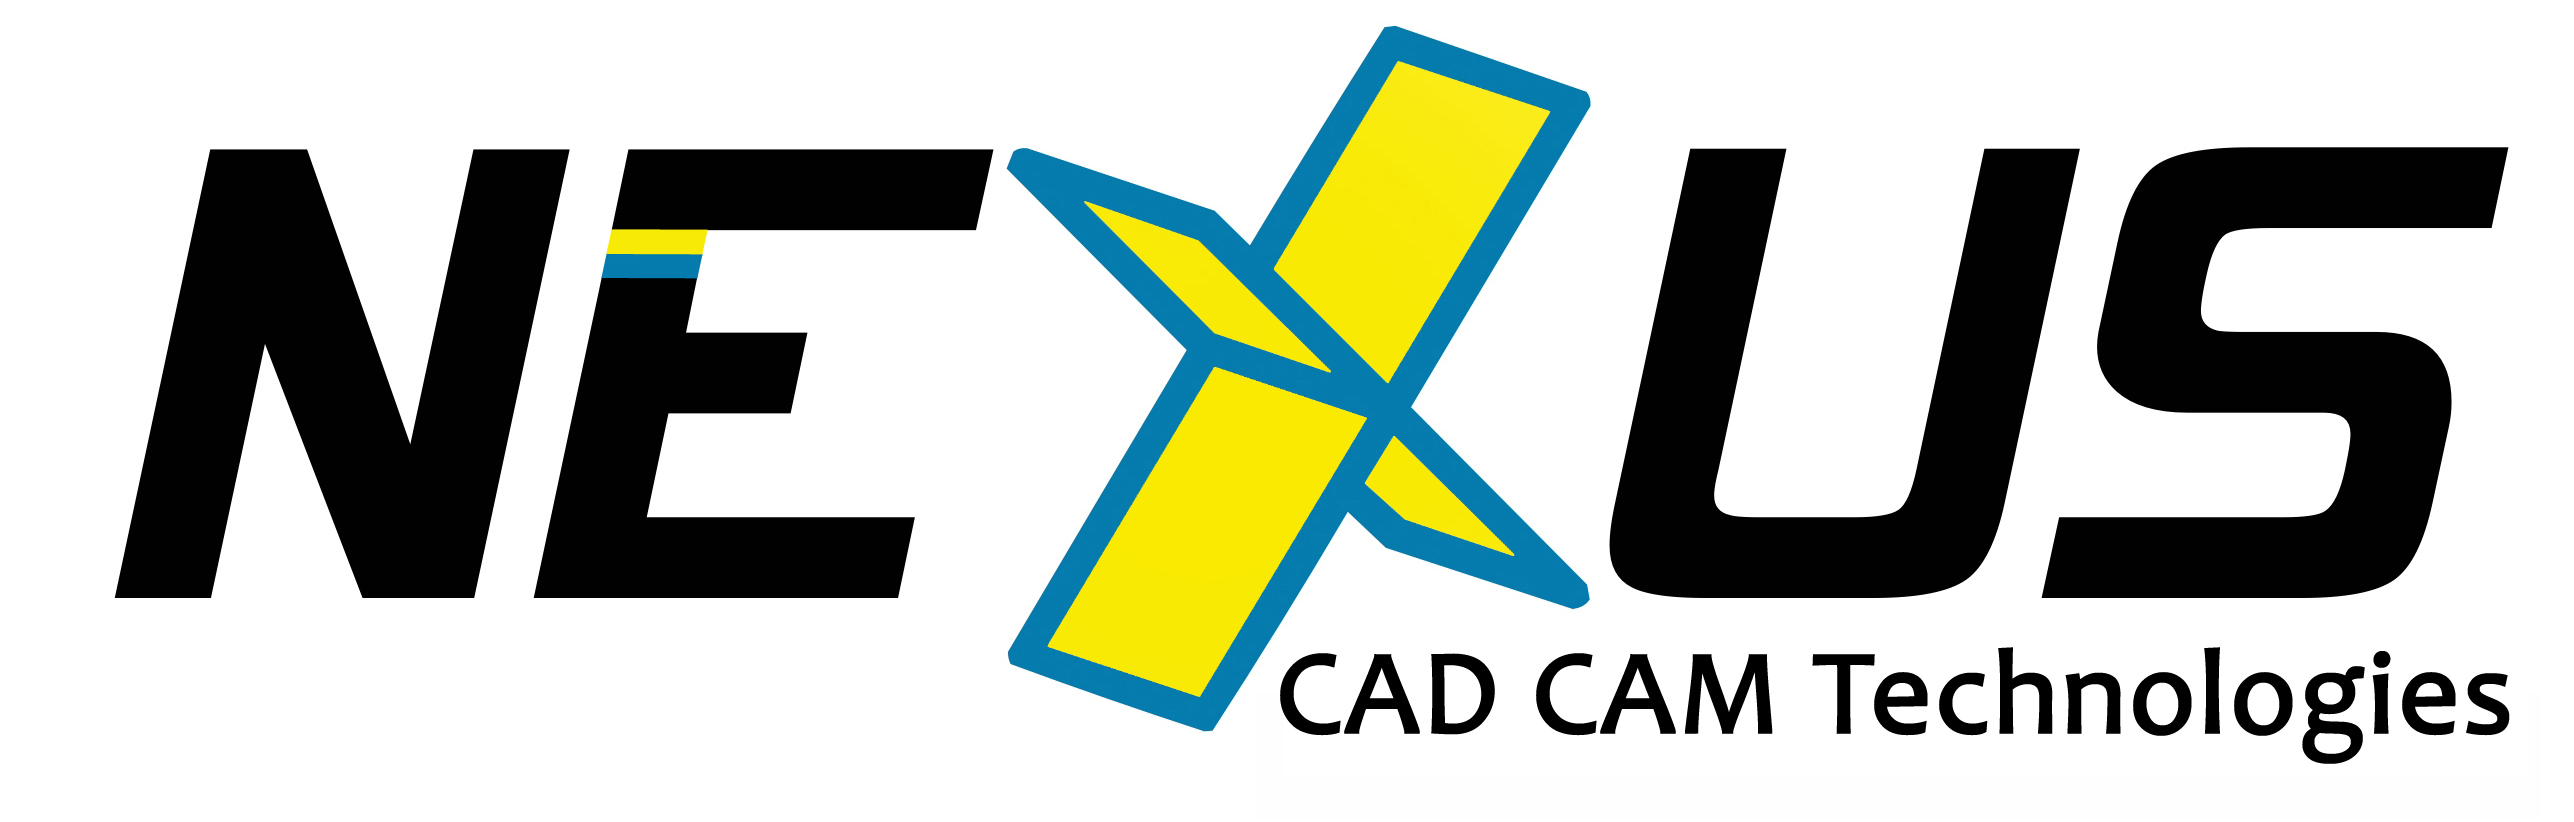 nexus-cad-cam-technologies